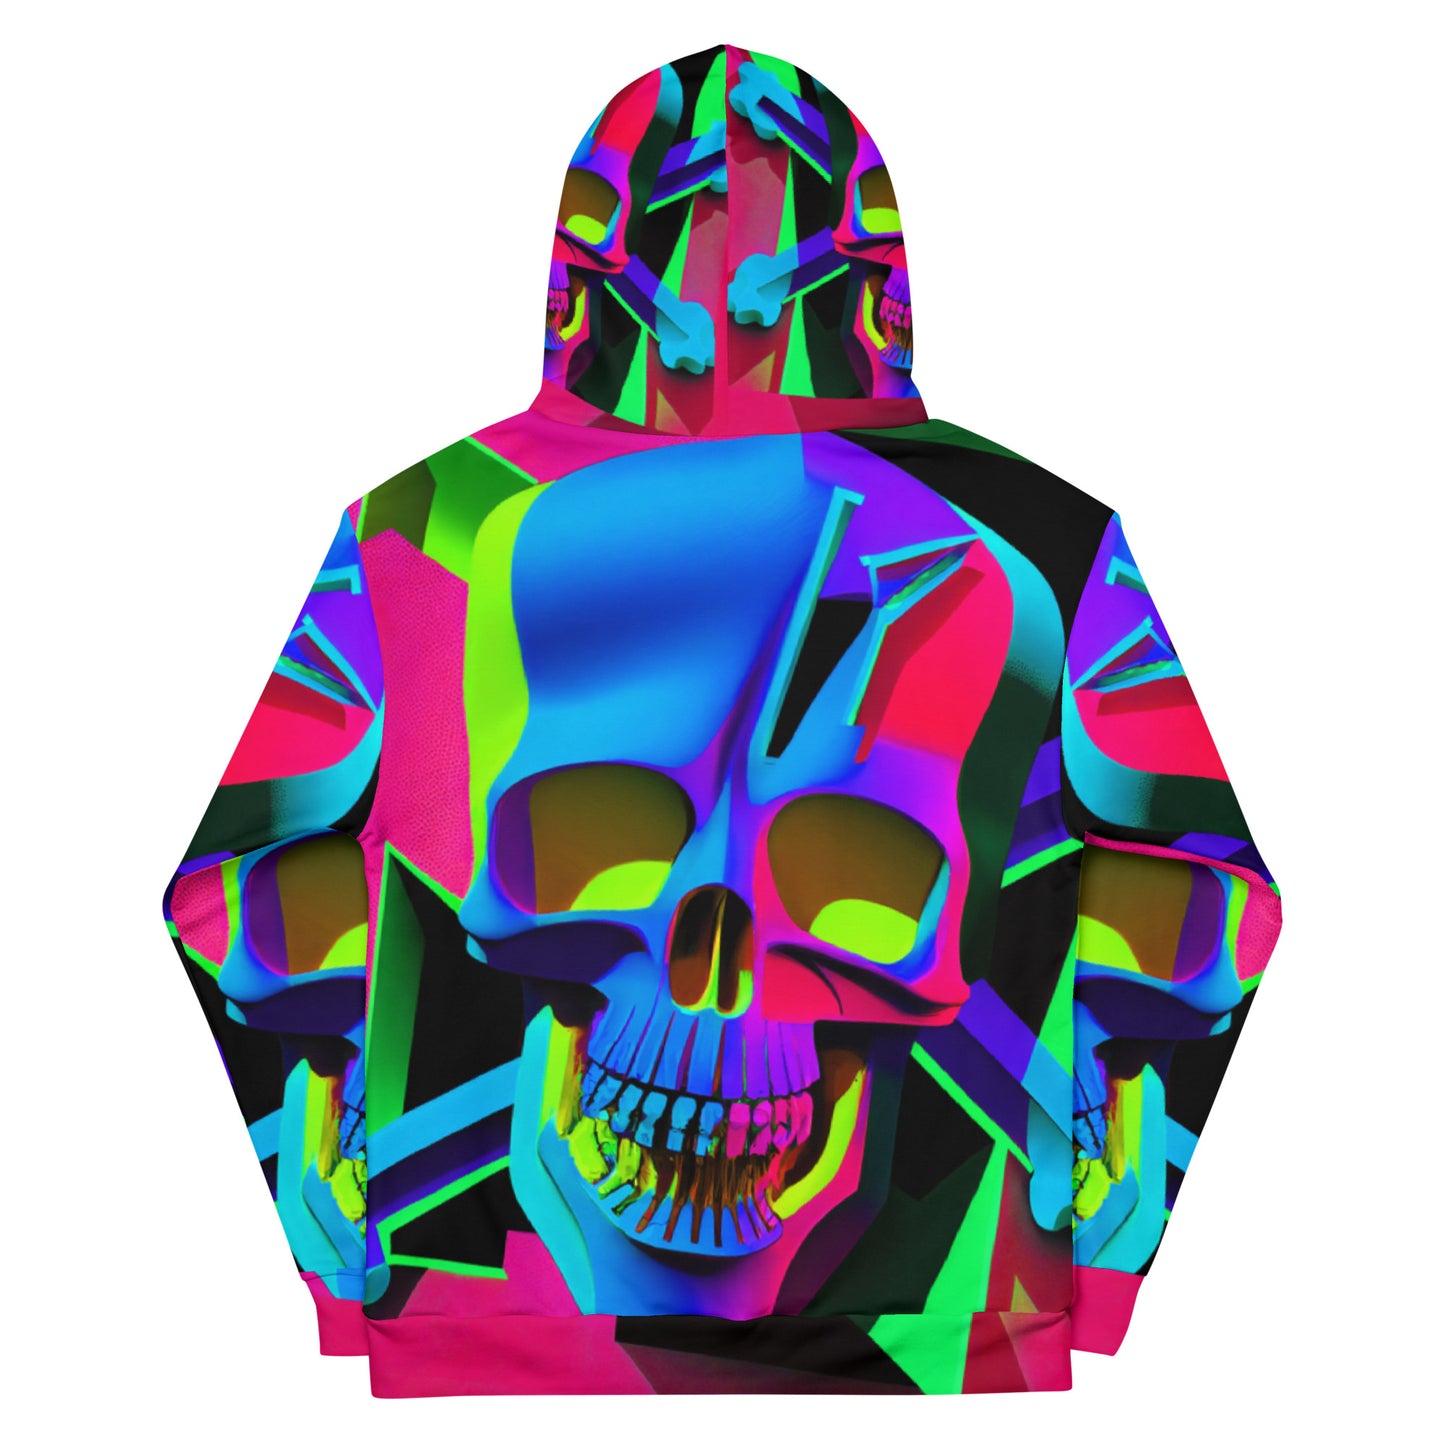 Pop Art Acid Skull 03 Unisex Hoodie Skate Wear / Club Wear / Stage Fashion